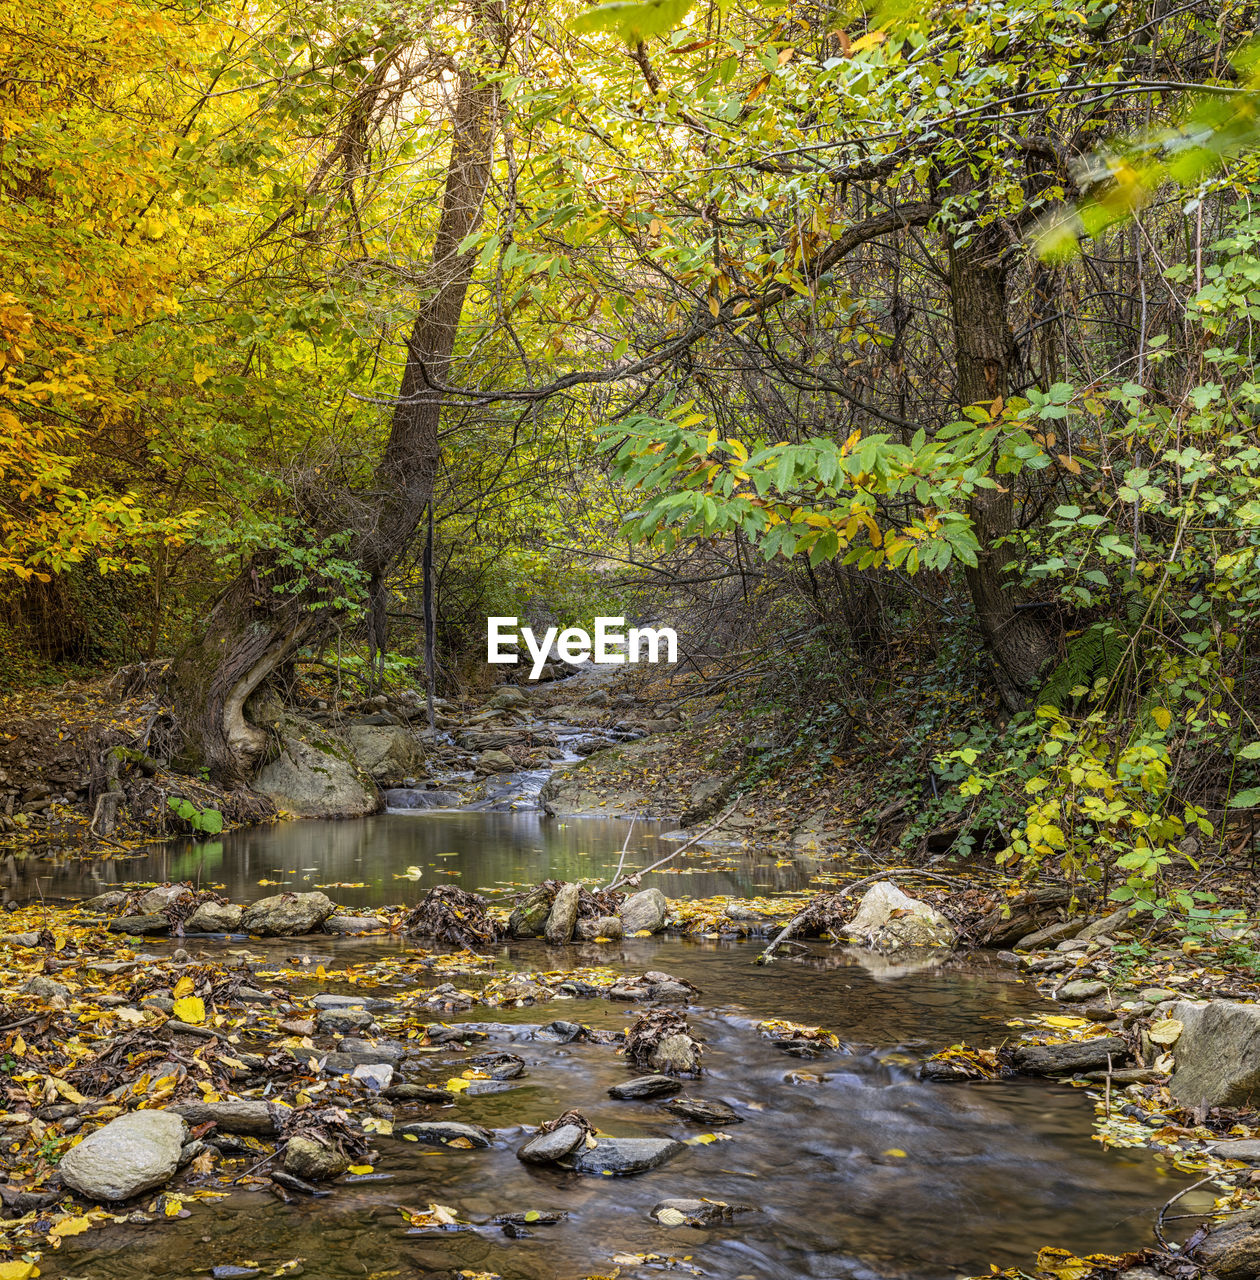 Clean mountain river in autumn.